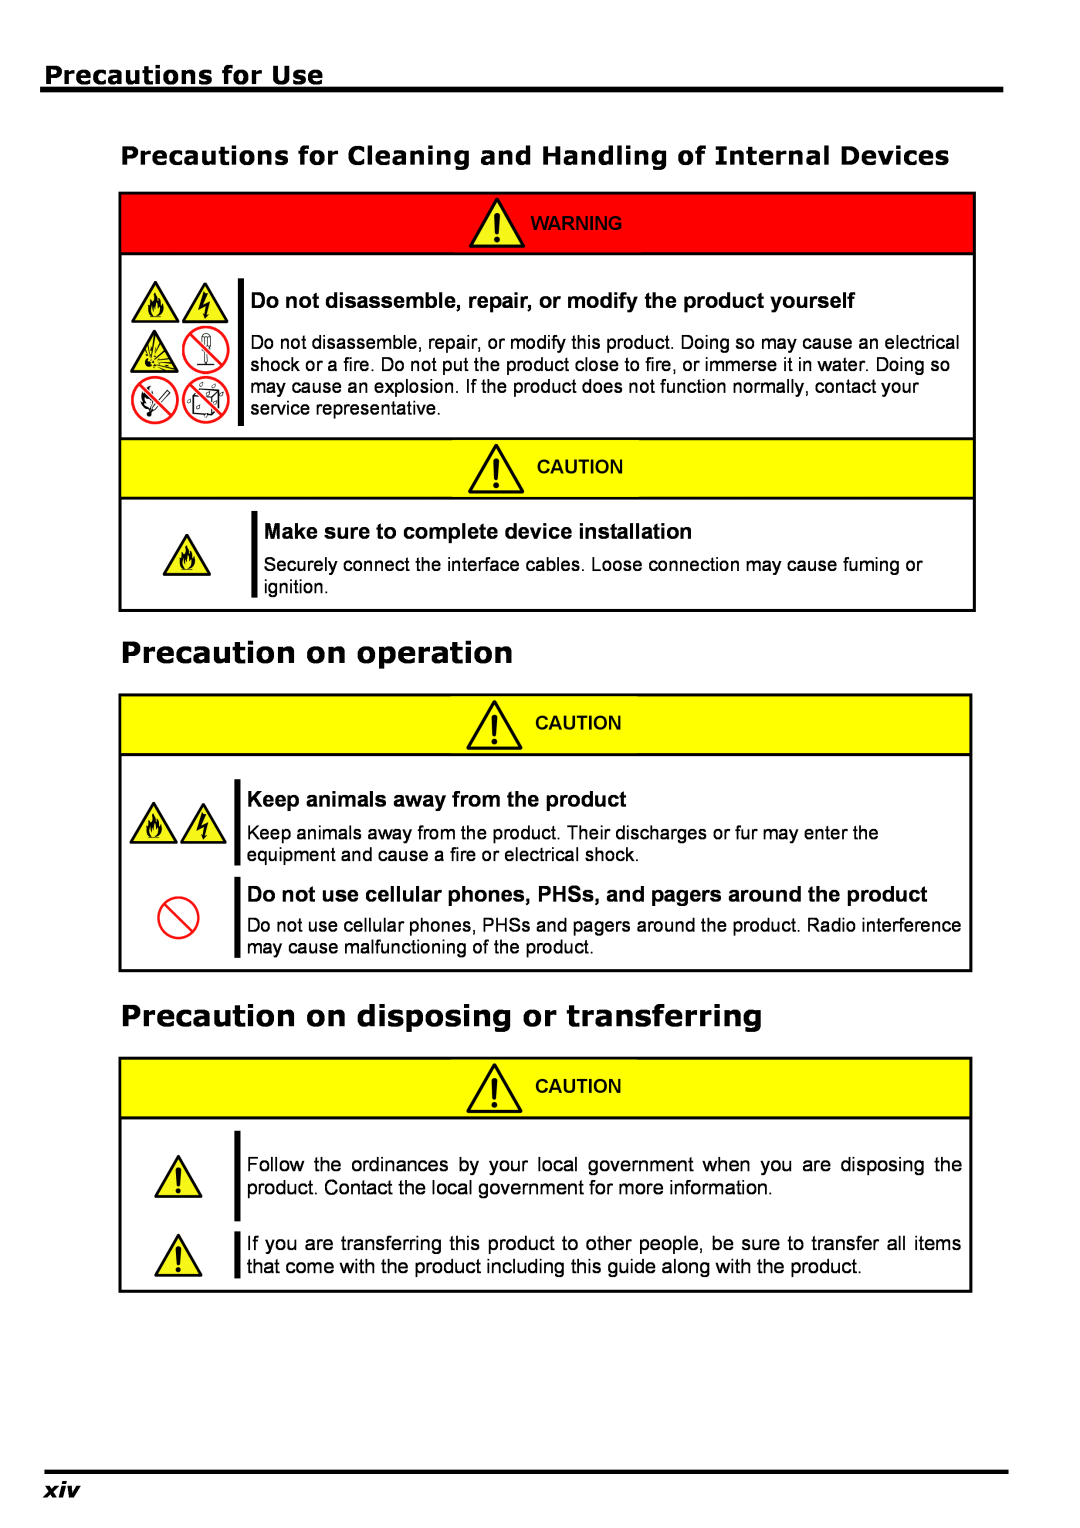 NEC N8406-022 manual Precaution on operation, Precaution on disposing or transferring, Precautions for Use 